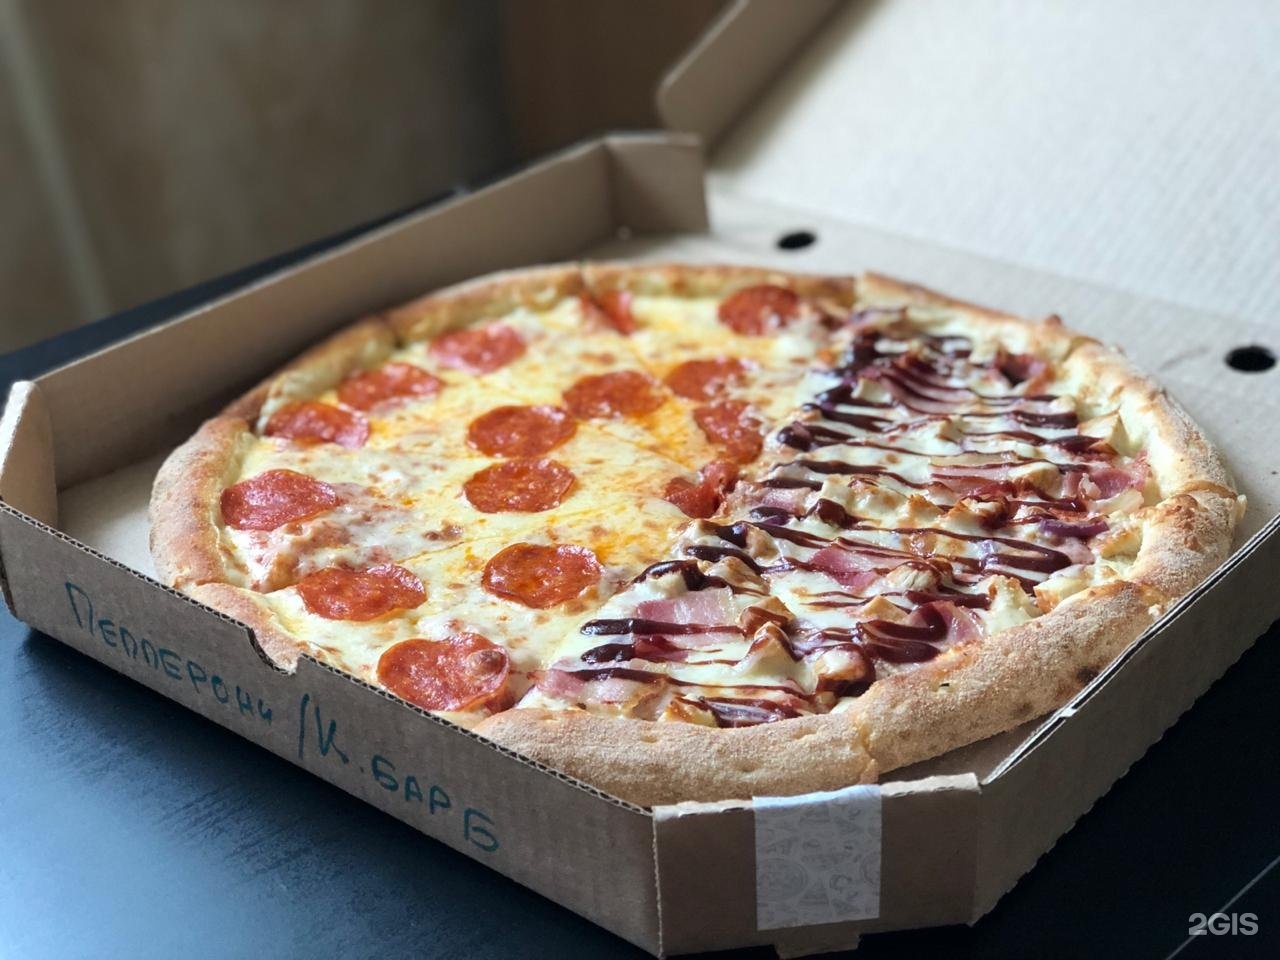 Пицца раскрывающая судьбу хорошая пицца. "Пицца". Вкусная пицца. Готовая пицца. Вкусная пицца реклама.